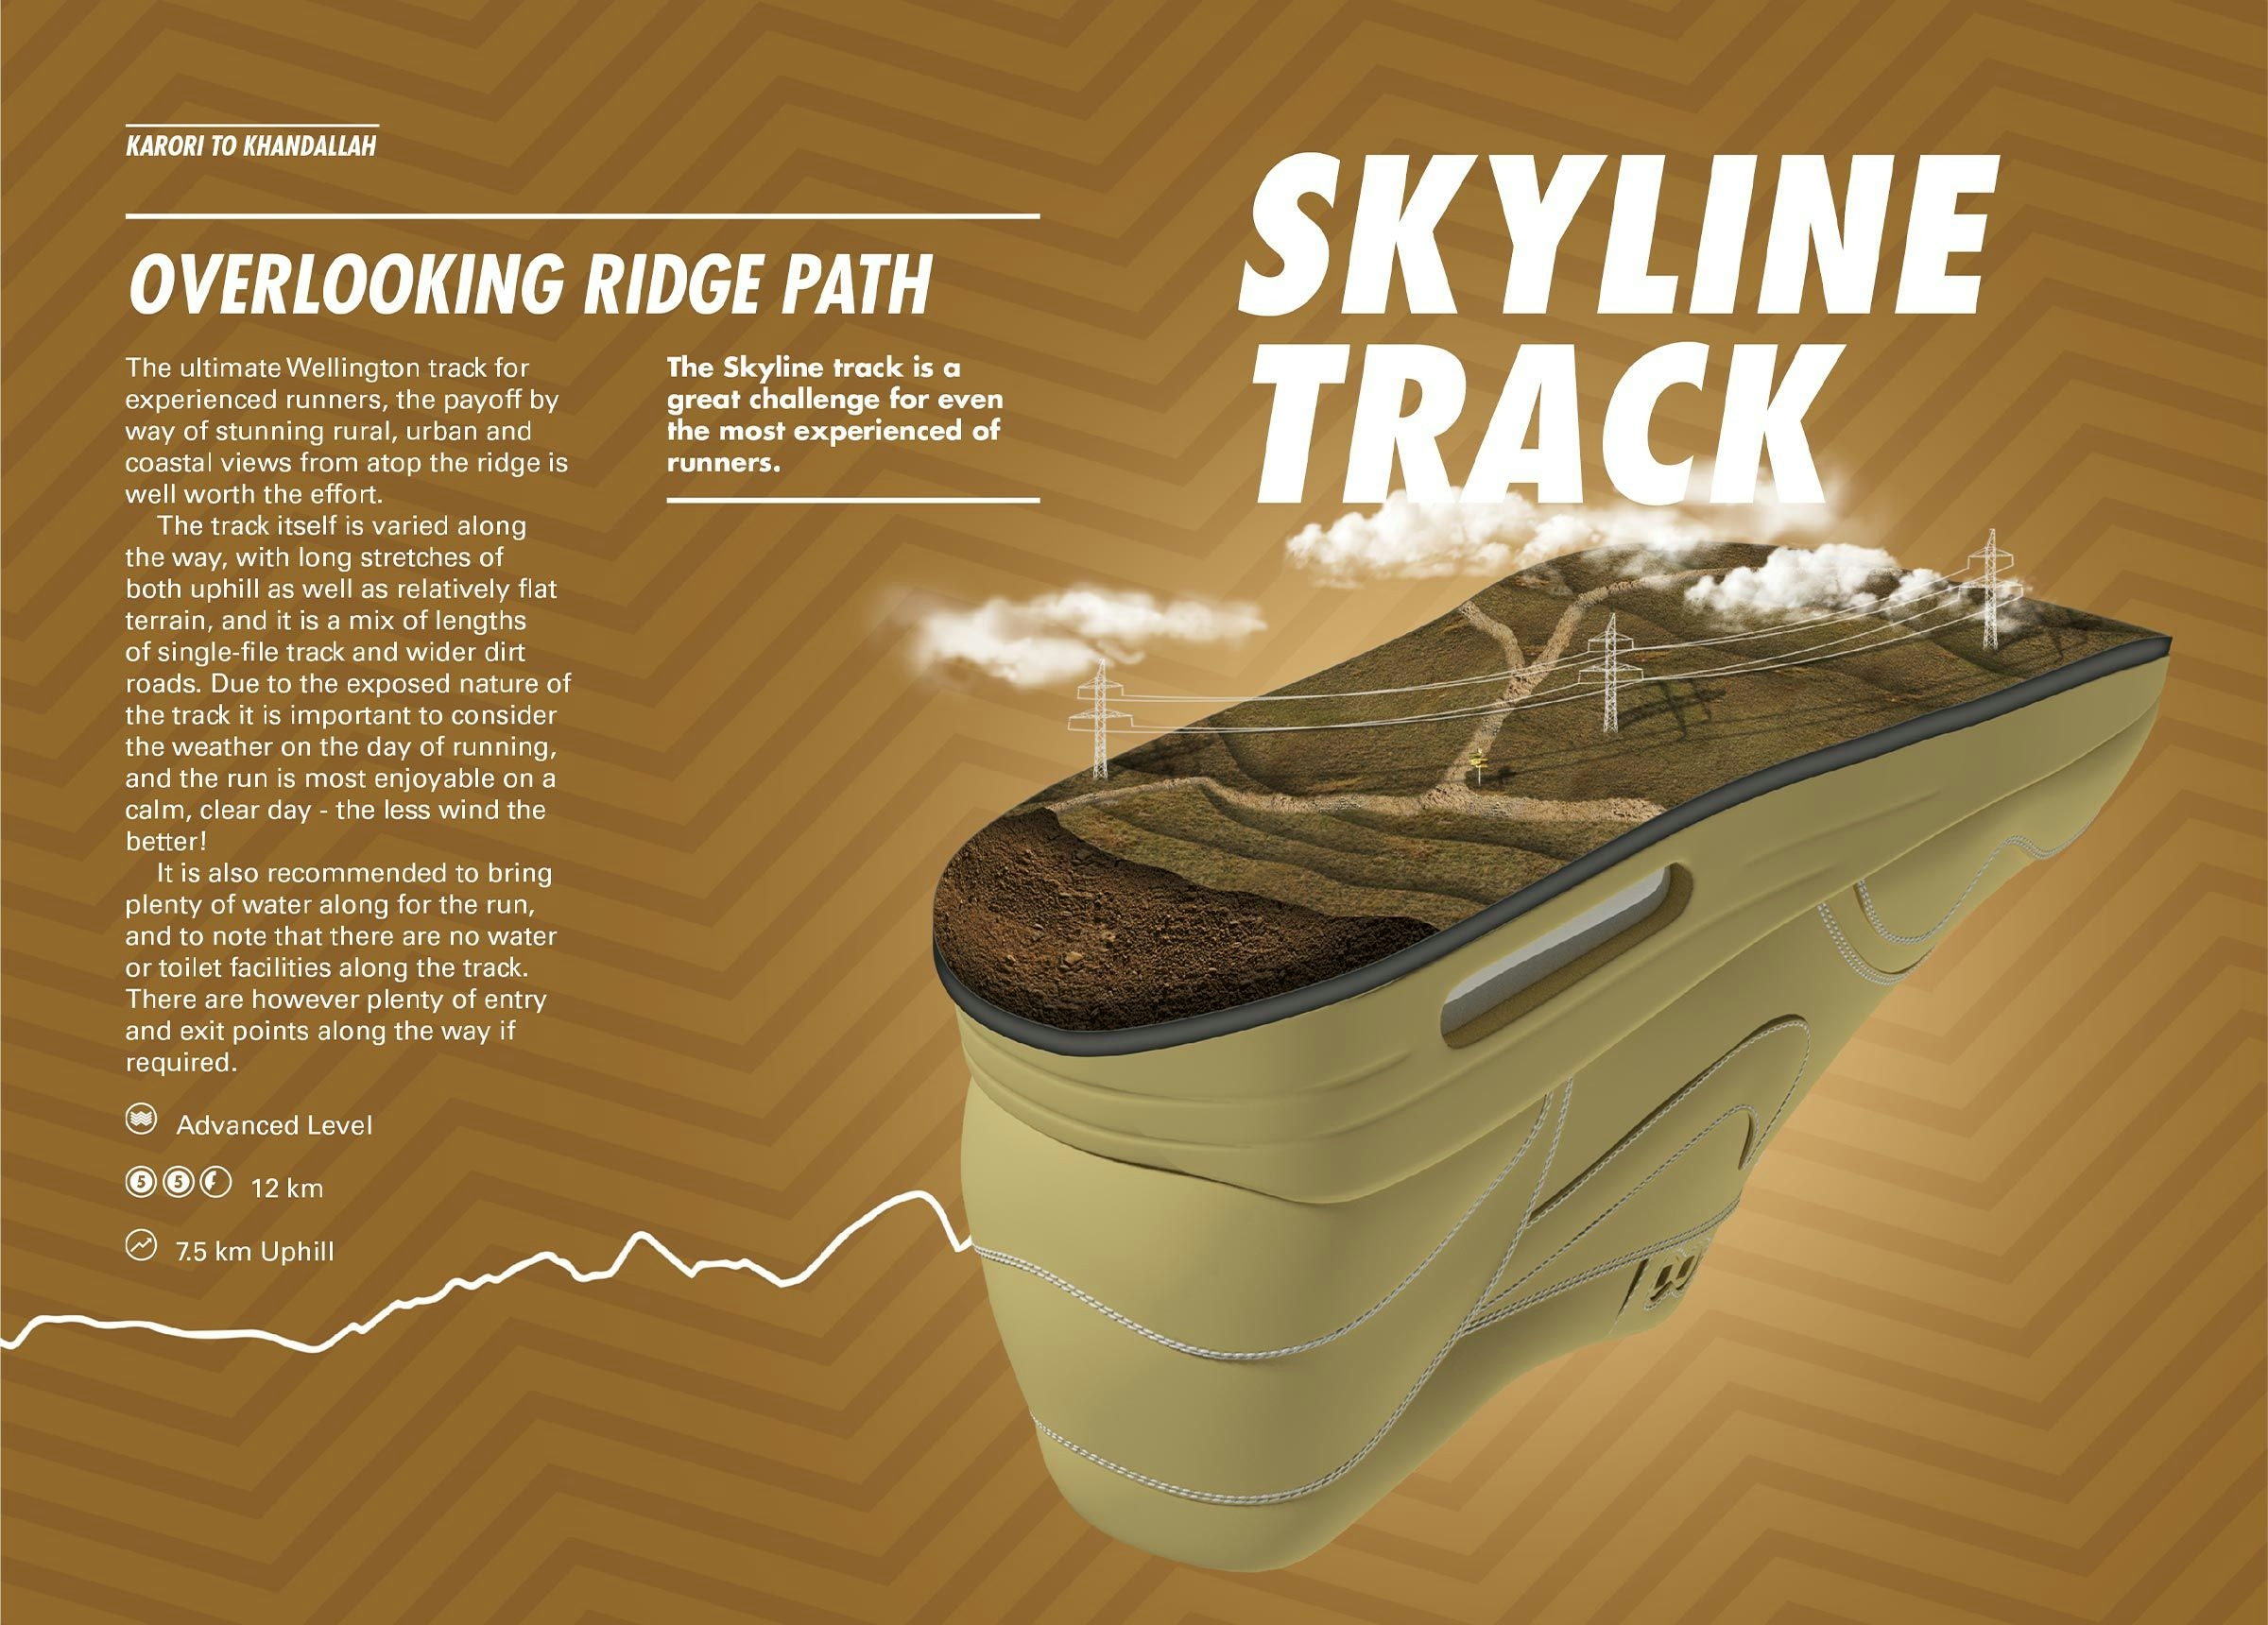 Overlooking ridge path: Skyline track